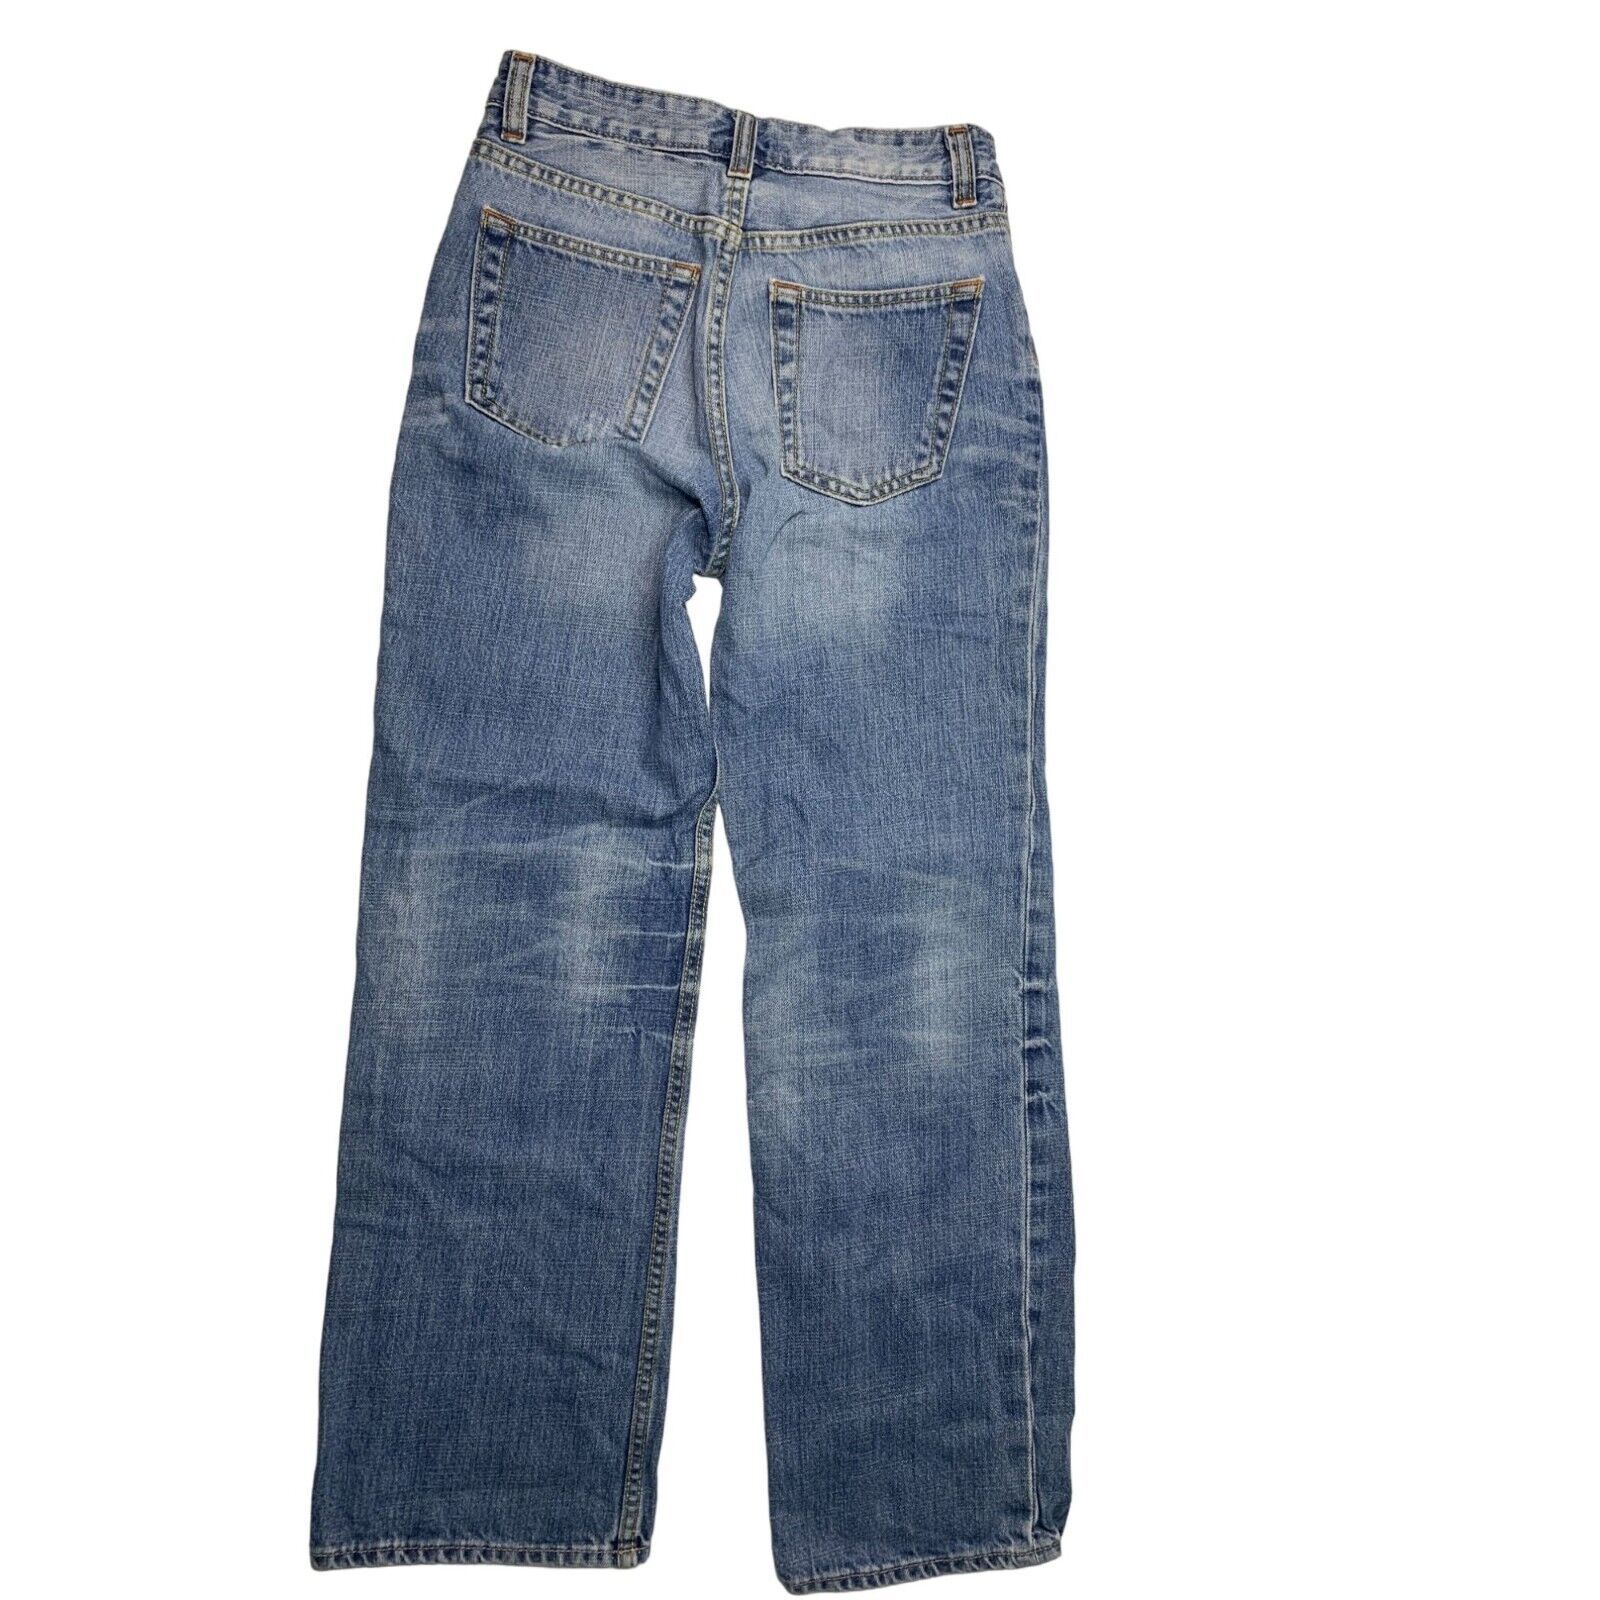 Primary image for Gap Denim Boys Siz 14 R Original Fit Distressed Jean Denim Jeans LIght Wash Stra